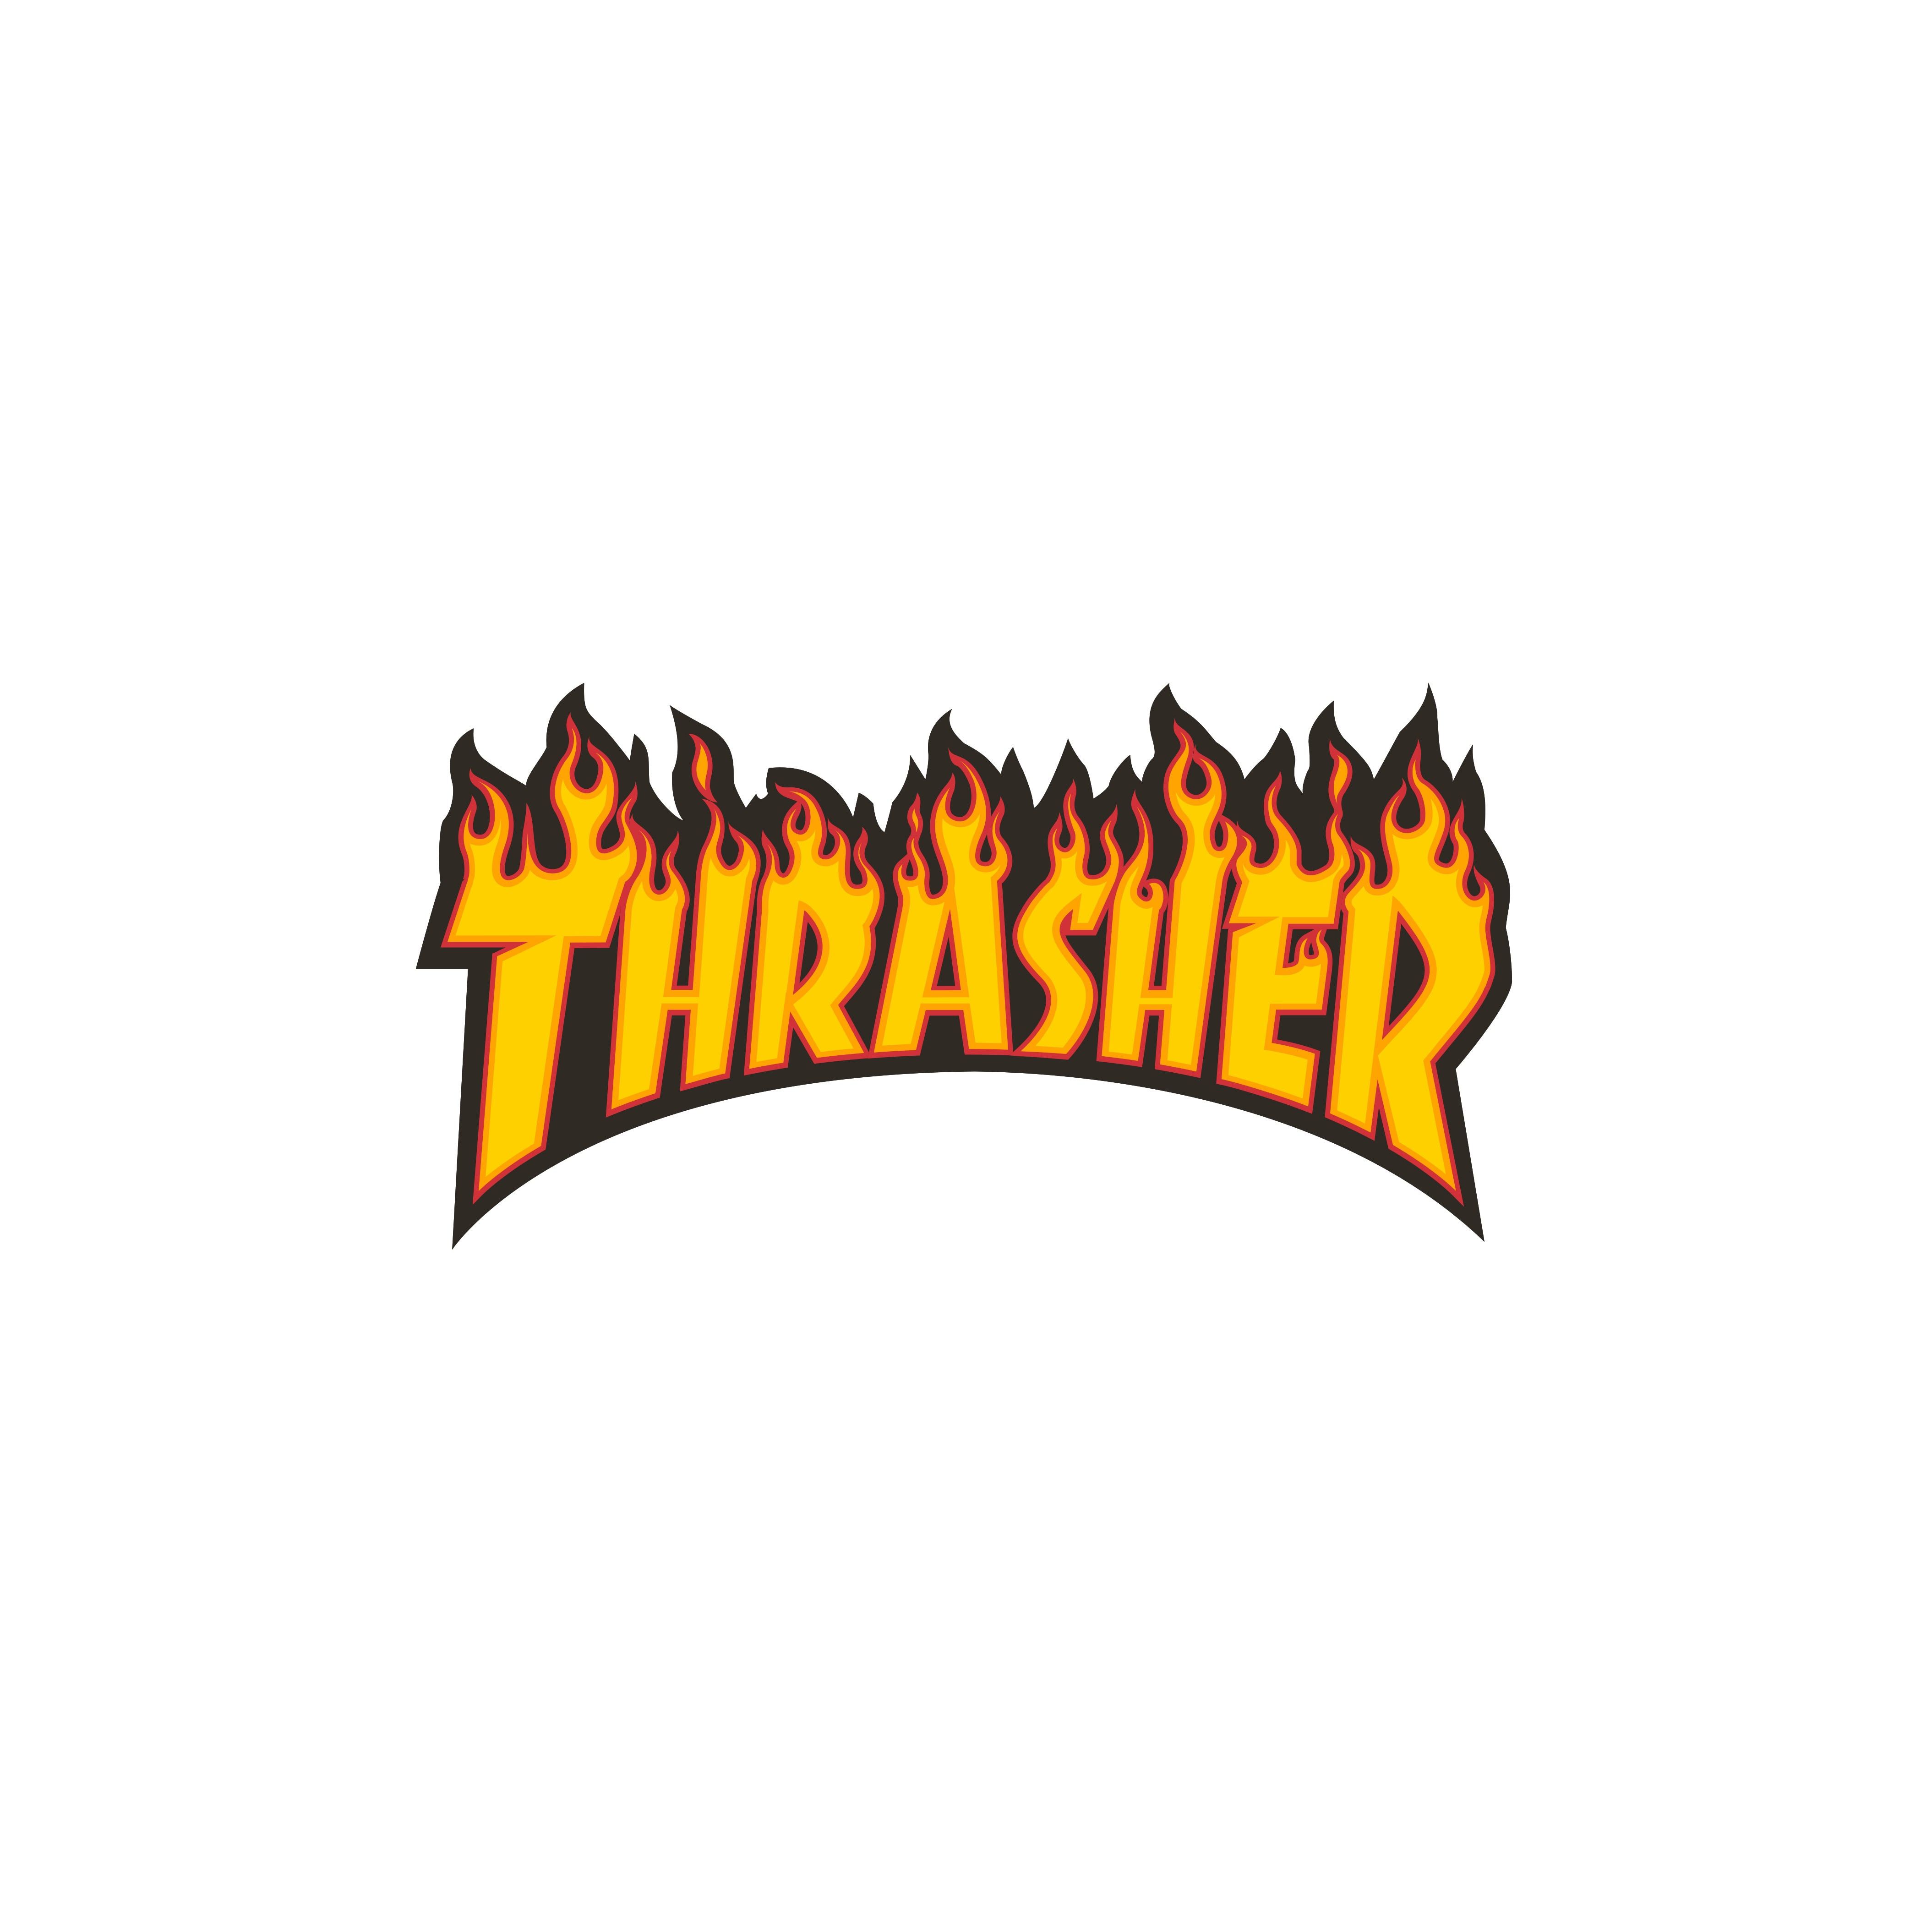 The logo for thrasher, a skateboarding magazine - Thrasher